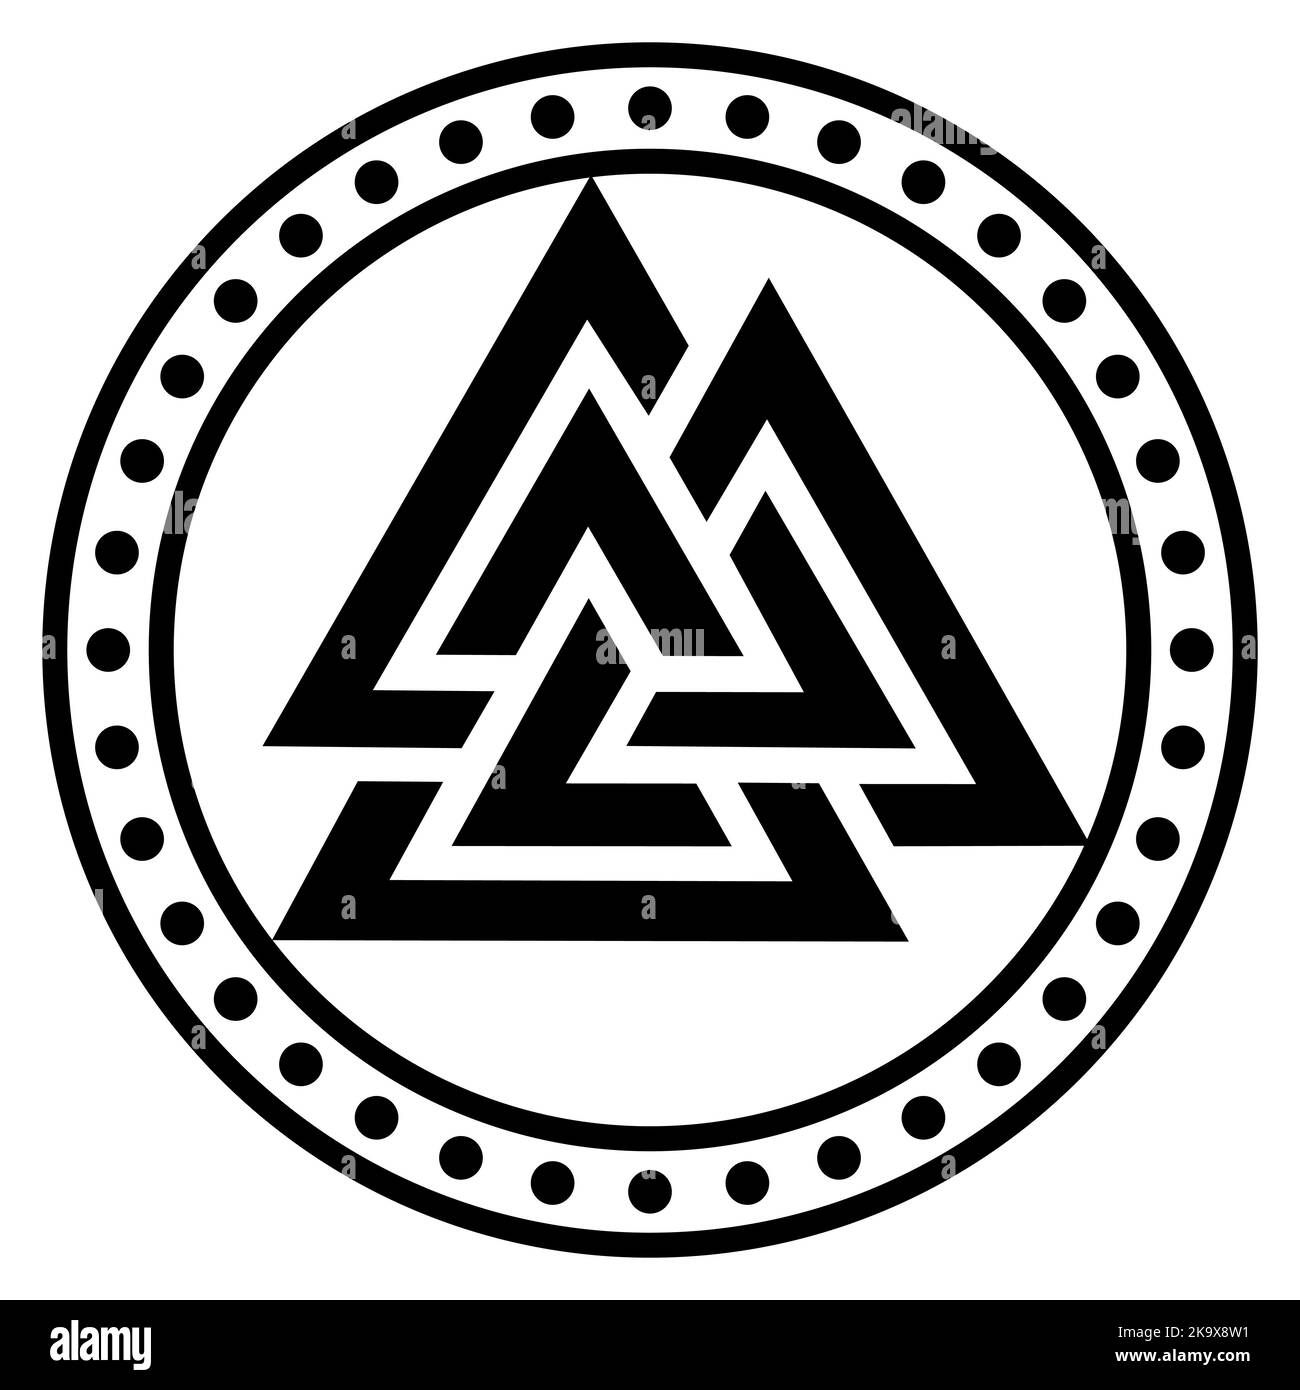 Valknut ancient pagan Nordic Germanic symbol Stock Vector